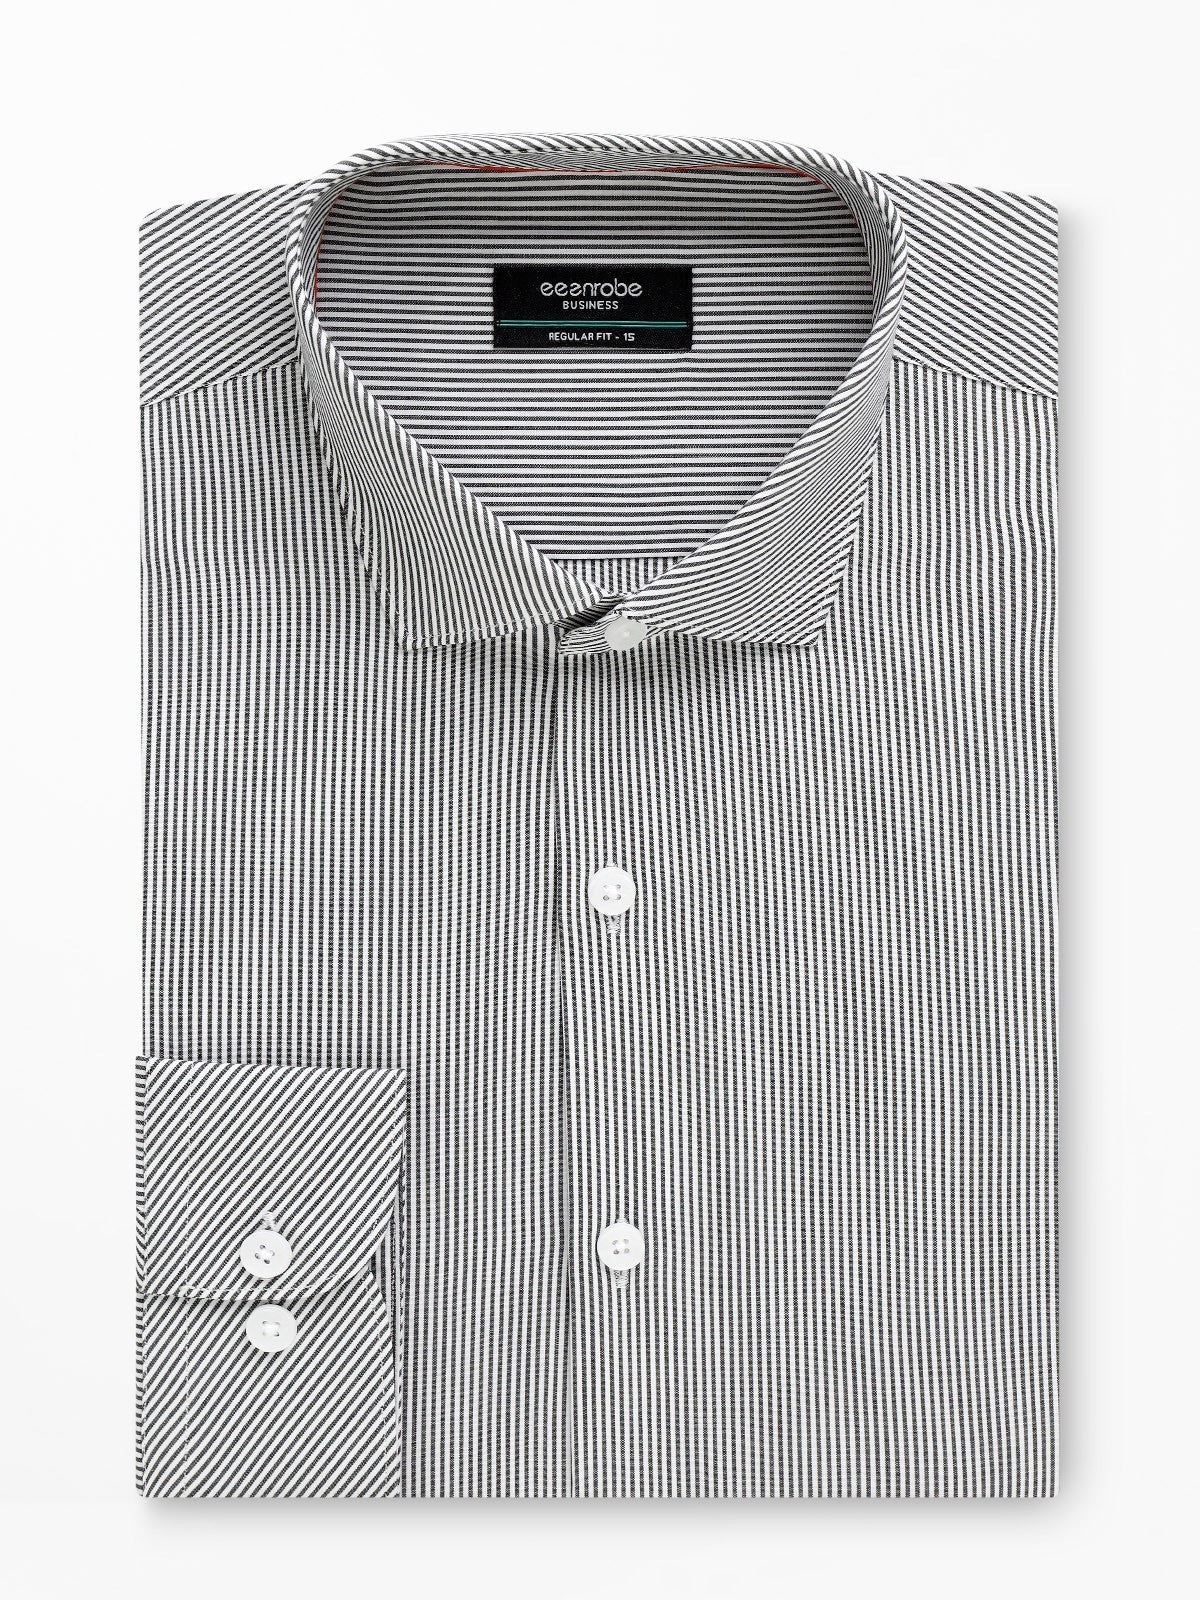 Men's White & Grey Shirt - EMTSB23-160